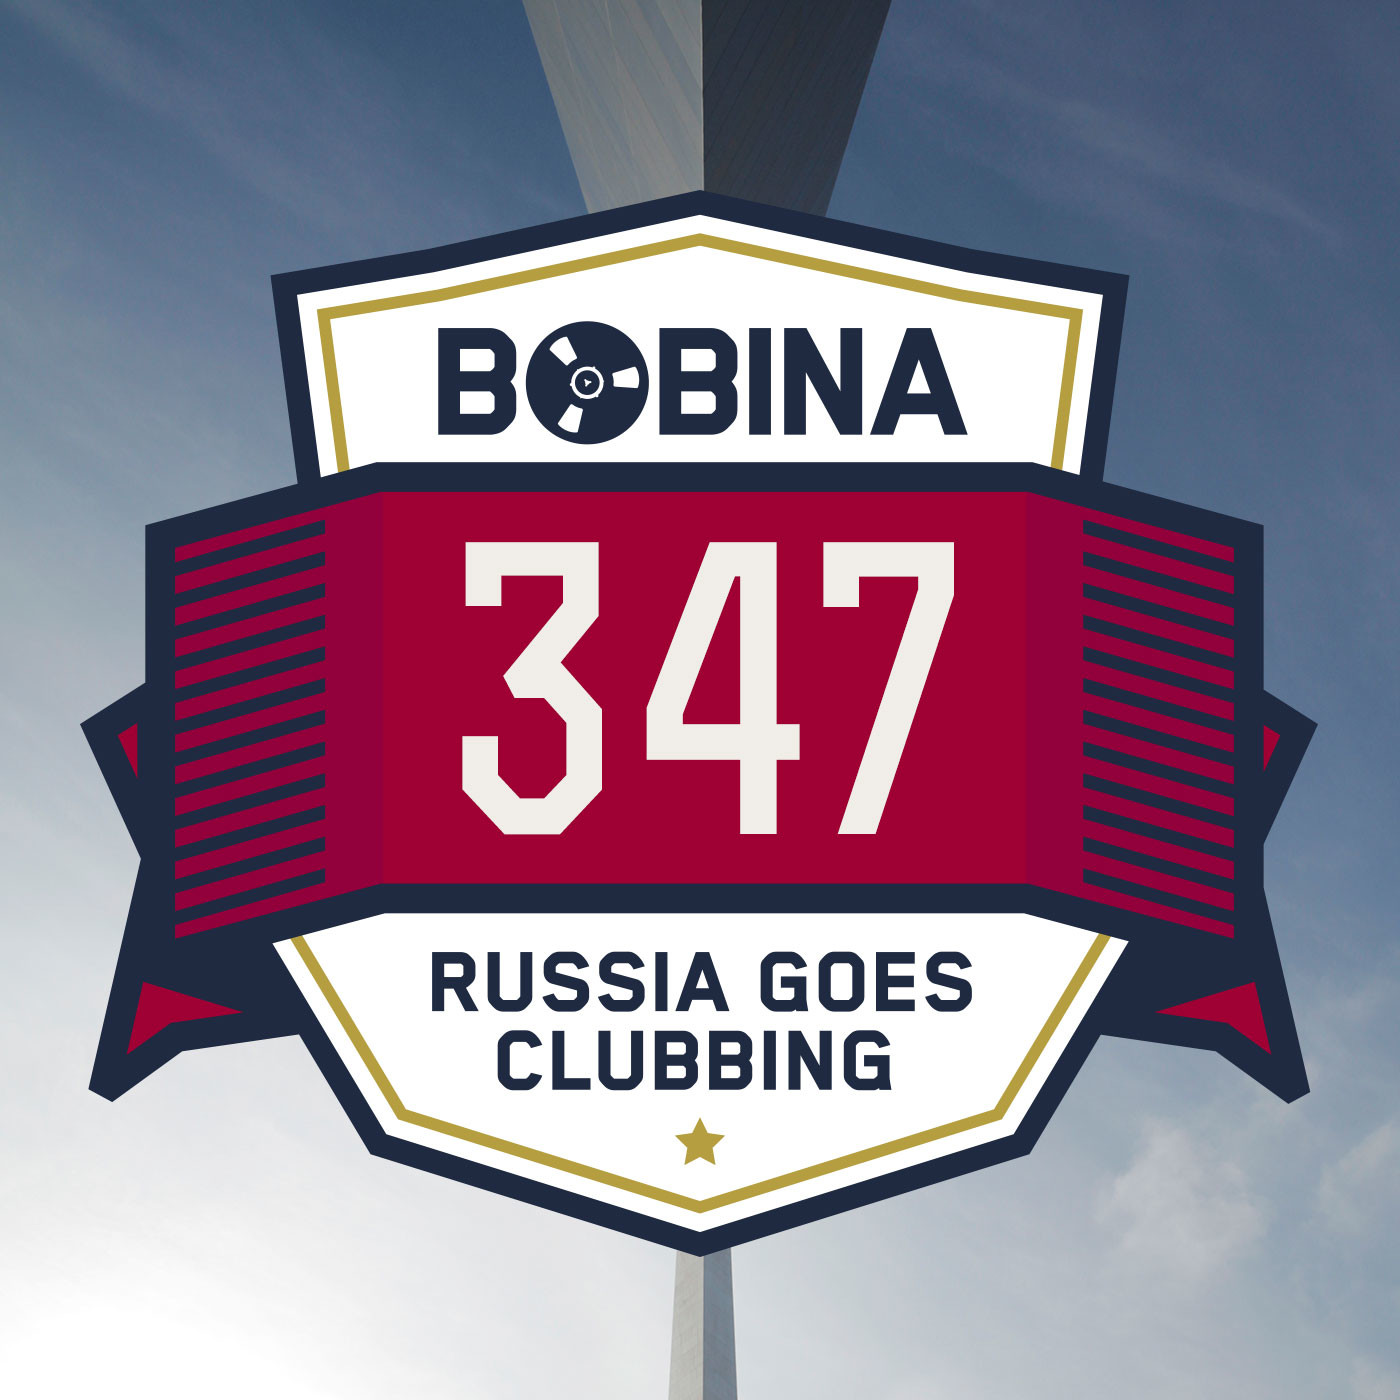 Nr. 347 Russia Goes Clubbing